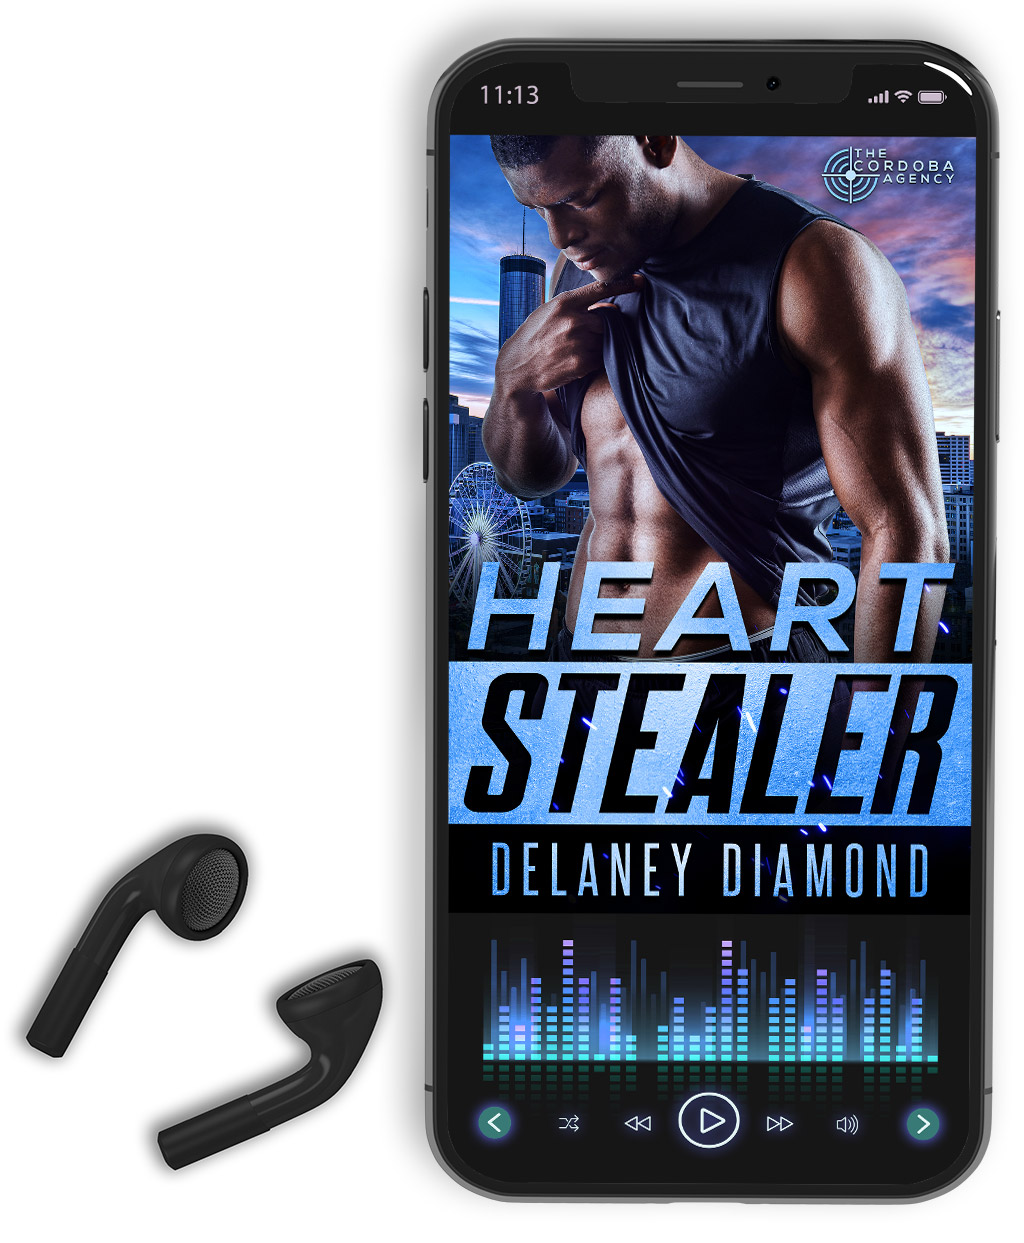 Heart Stealer - The Cordoba Agency series #3 - Audiobook by Delaney Diamond